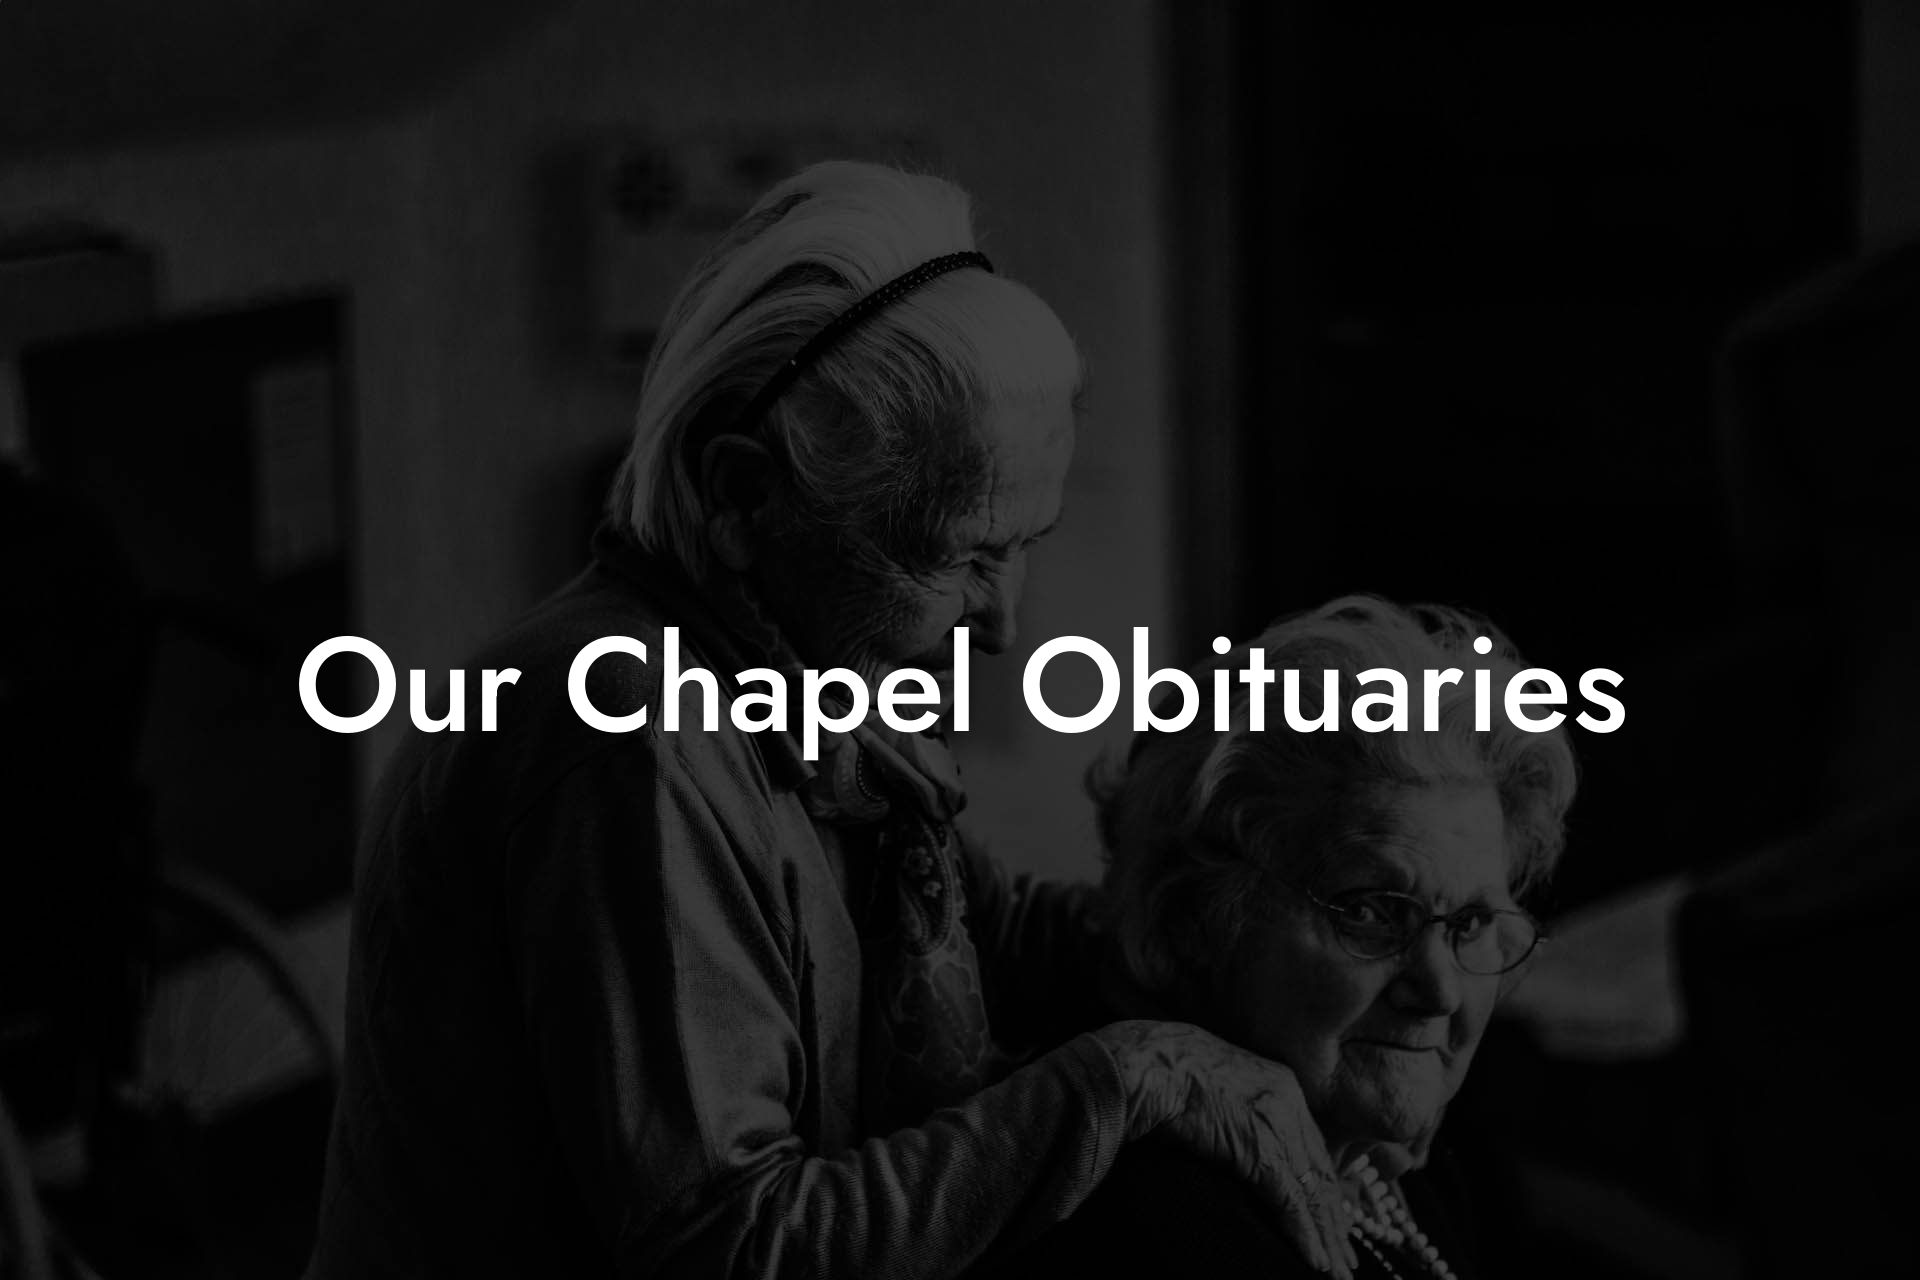 Our Chapel Obituaries